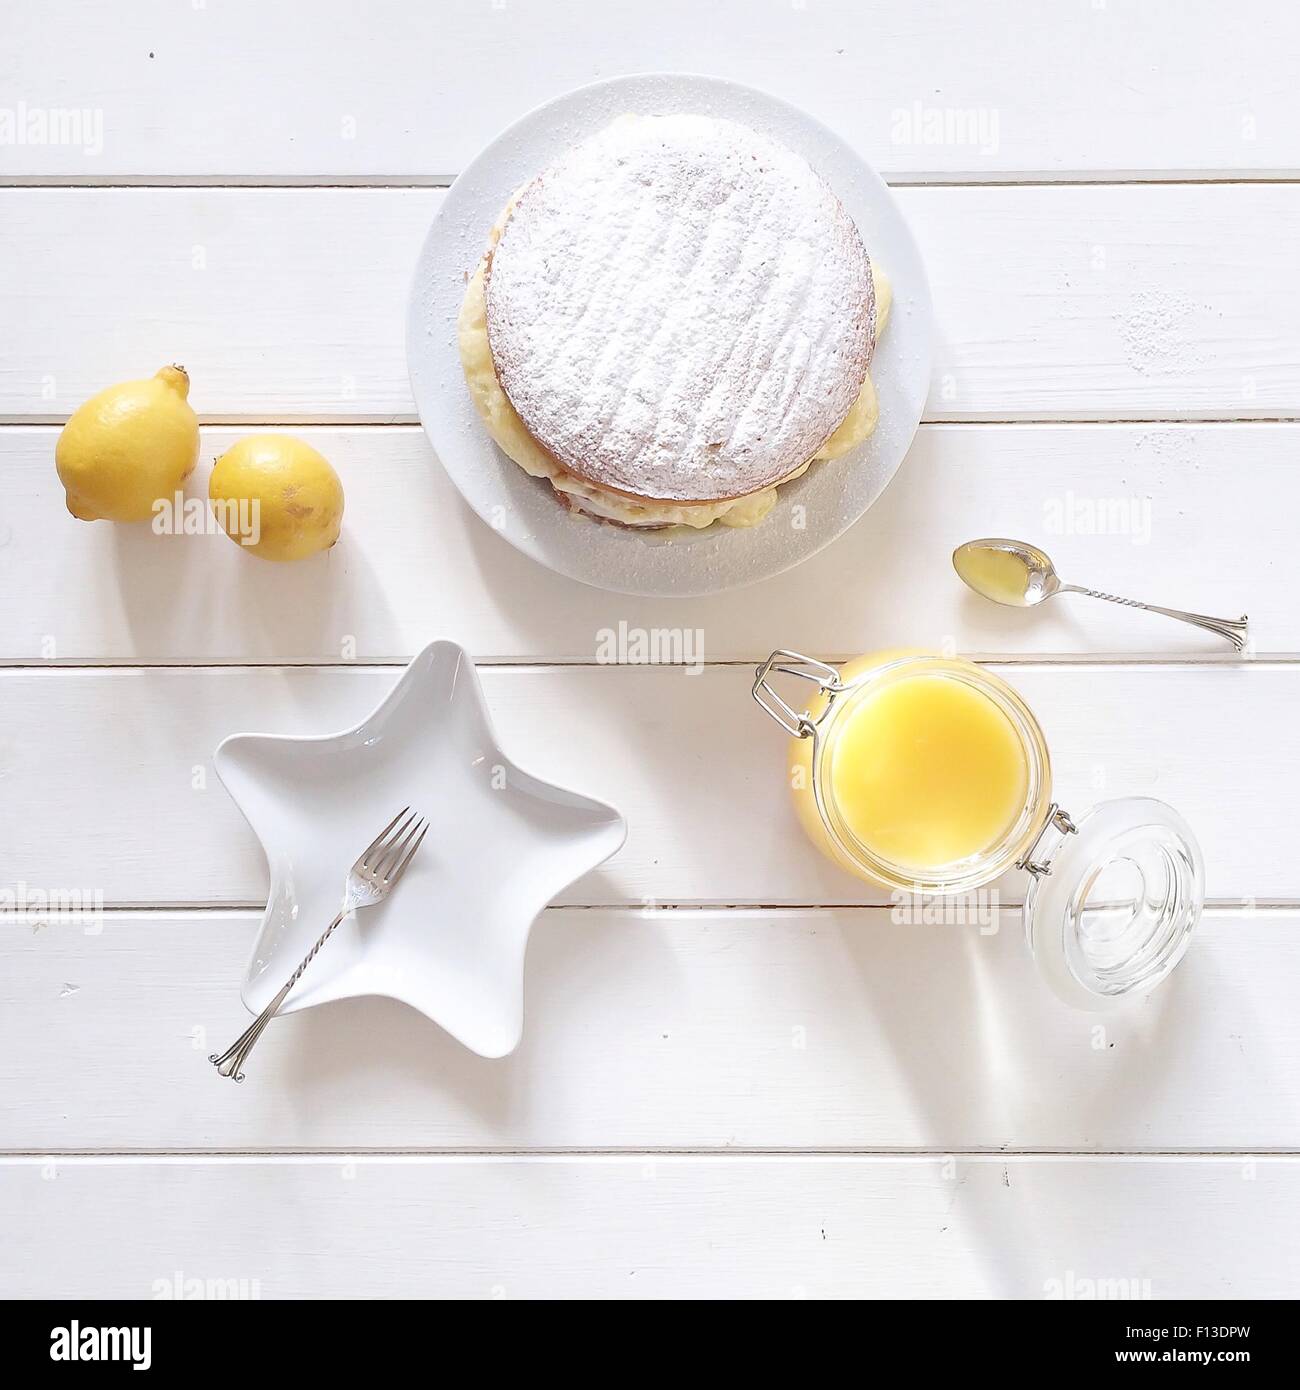 Lemon cake with lemon curd and lemons Stock Photo